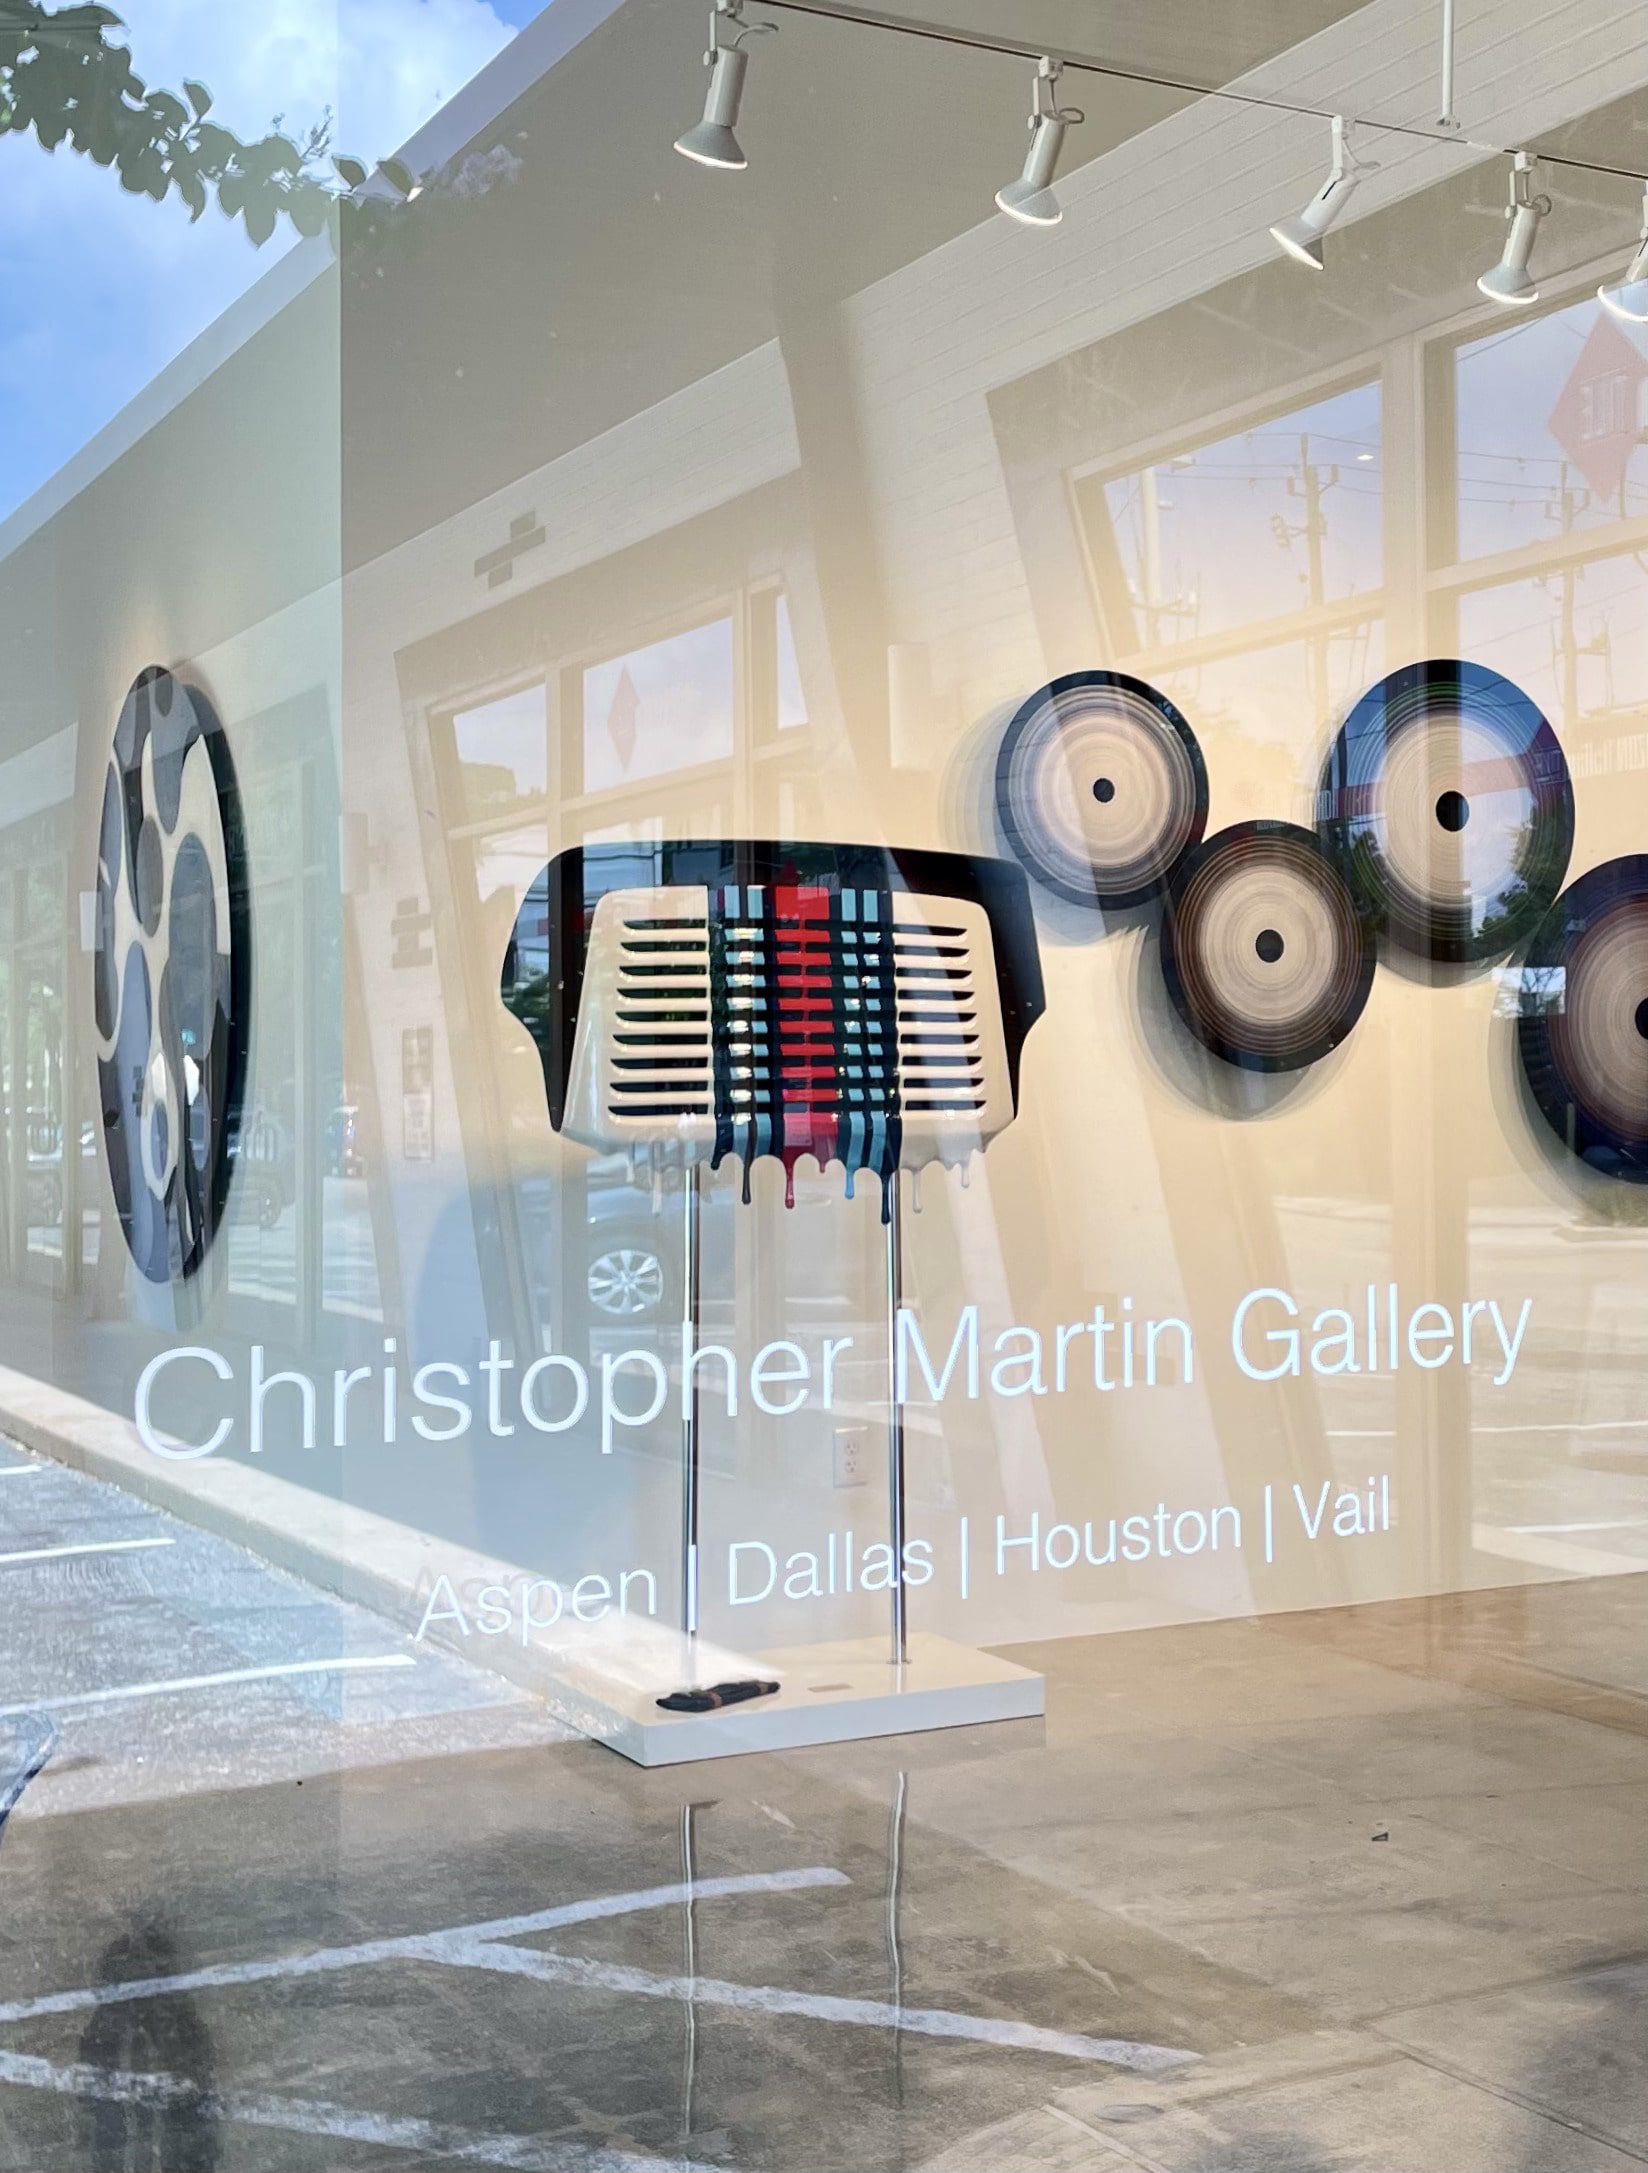 Christopher Martin Gallery